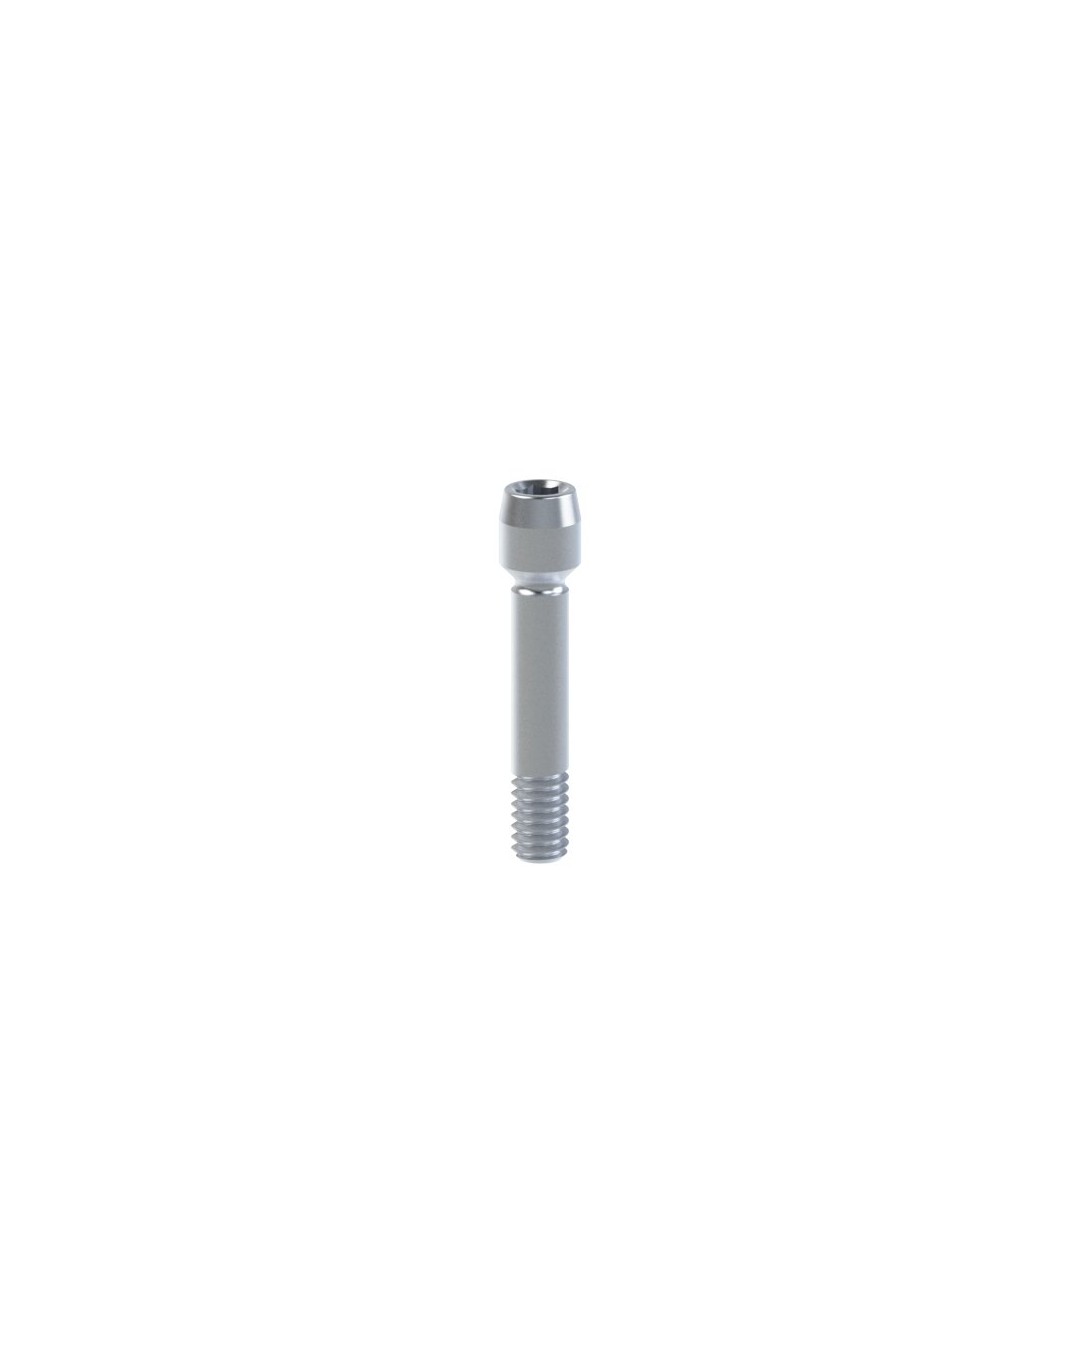 Titanium Screw compatible with Osstem TSIII